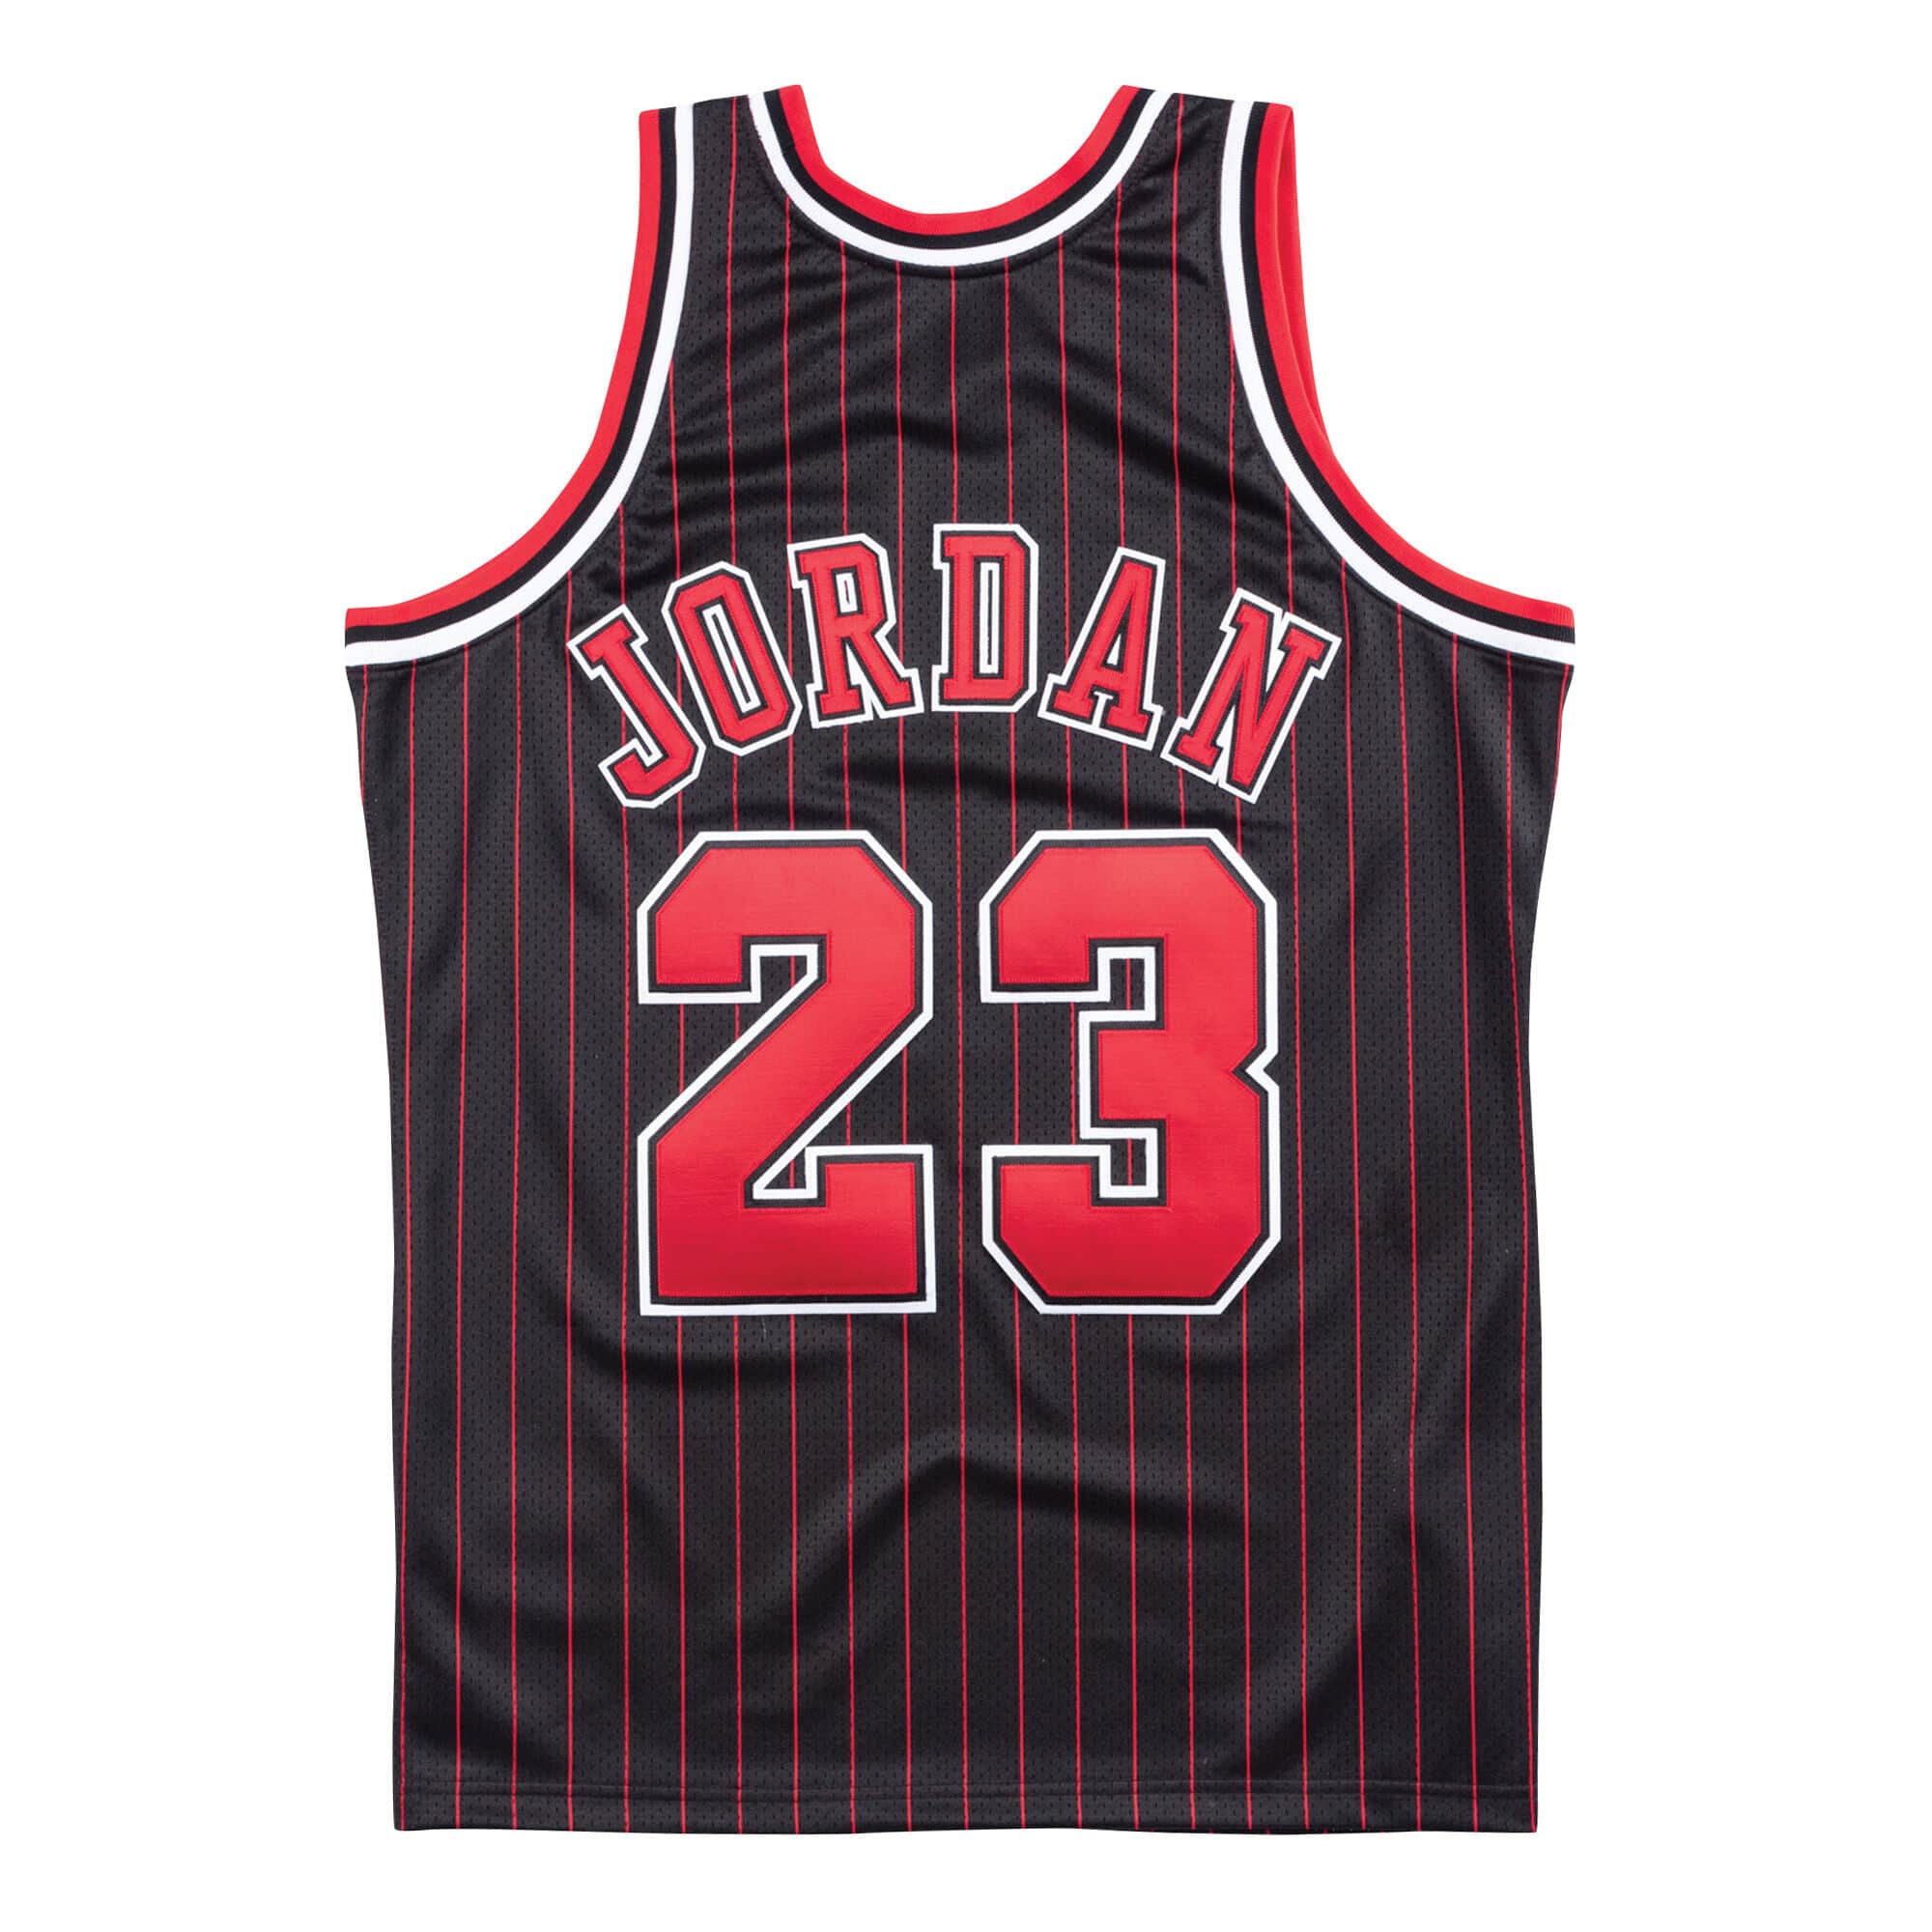 Michael Jordan Jumpman 23 jersey shirt Size Large Gray Black